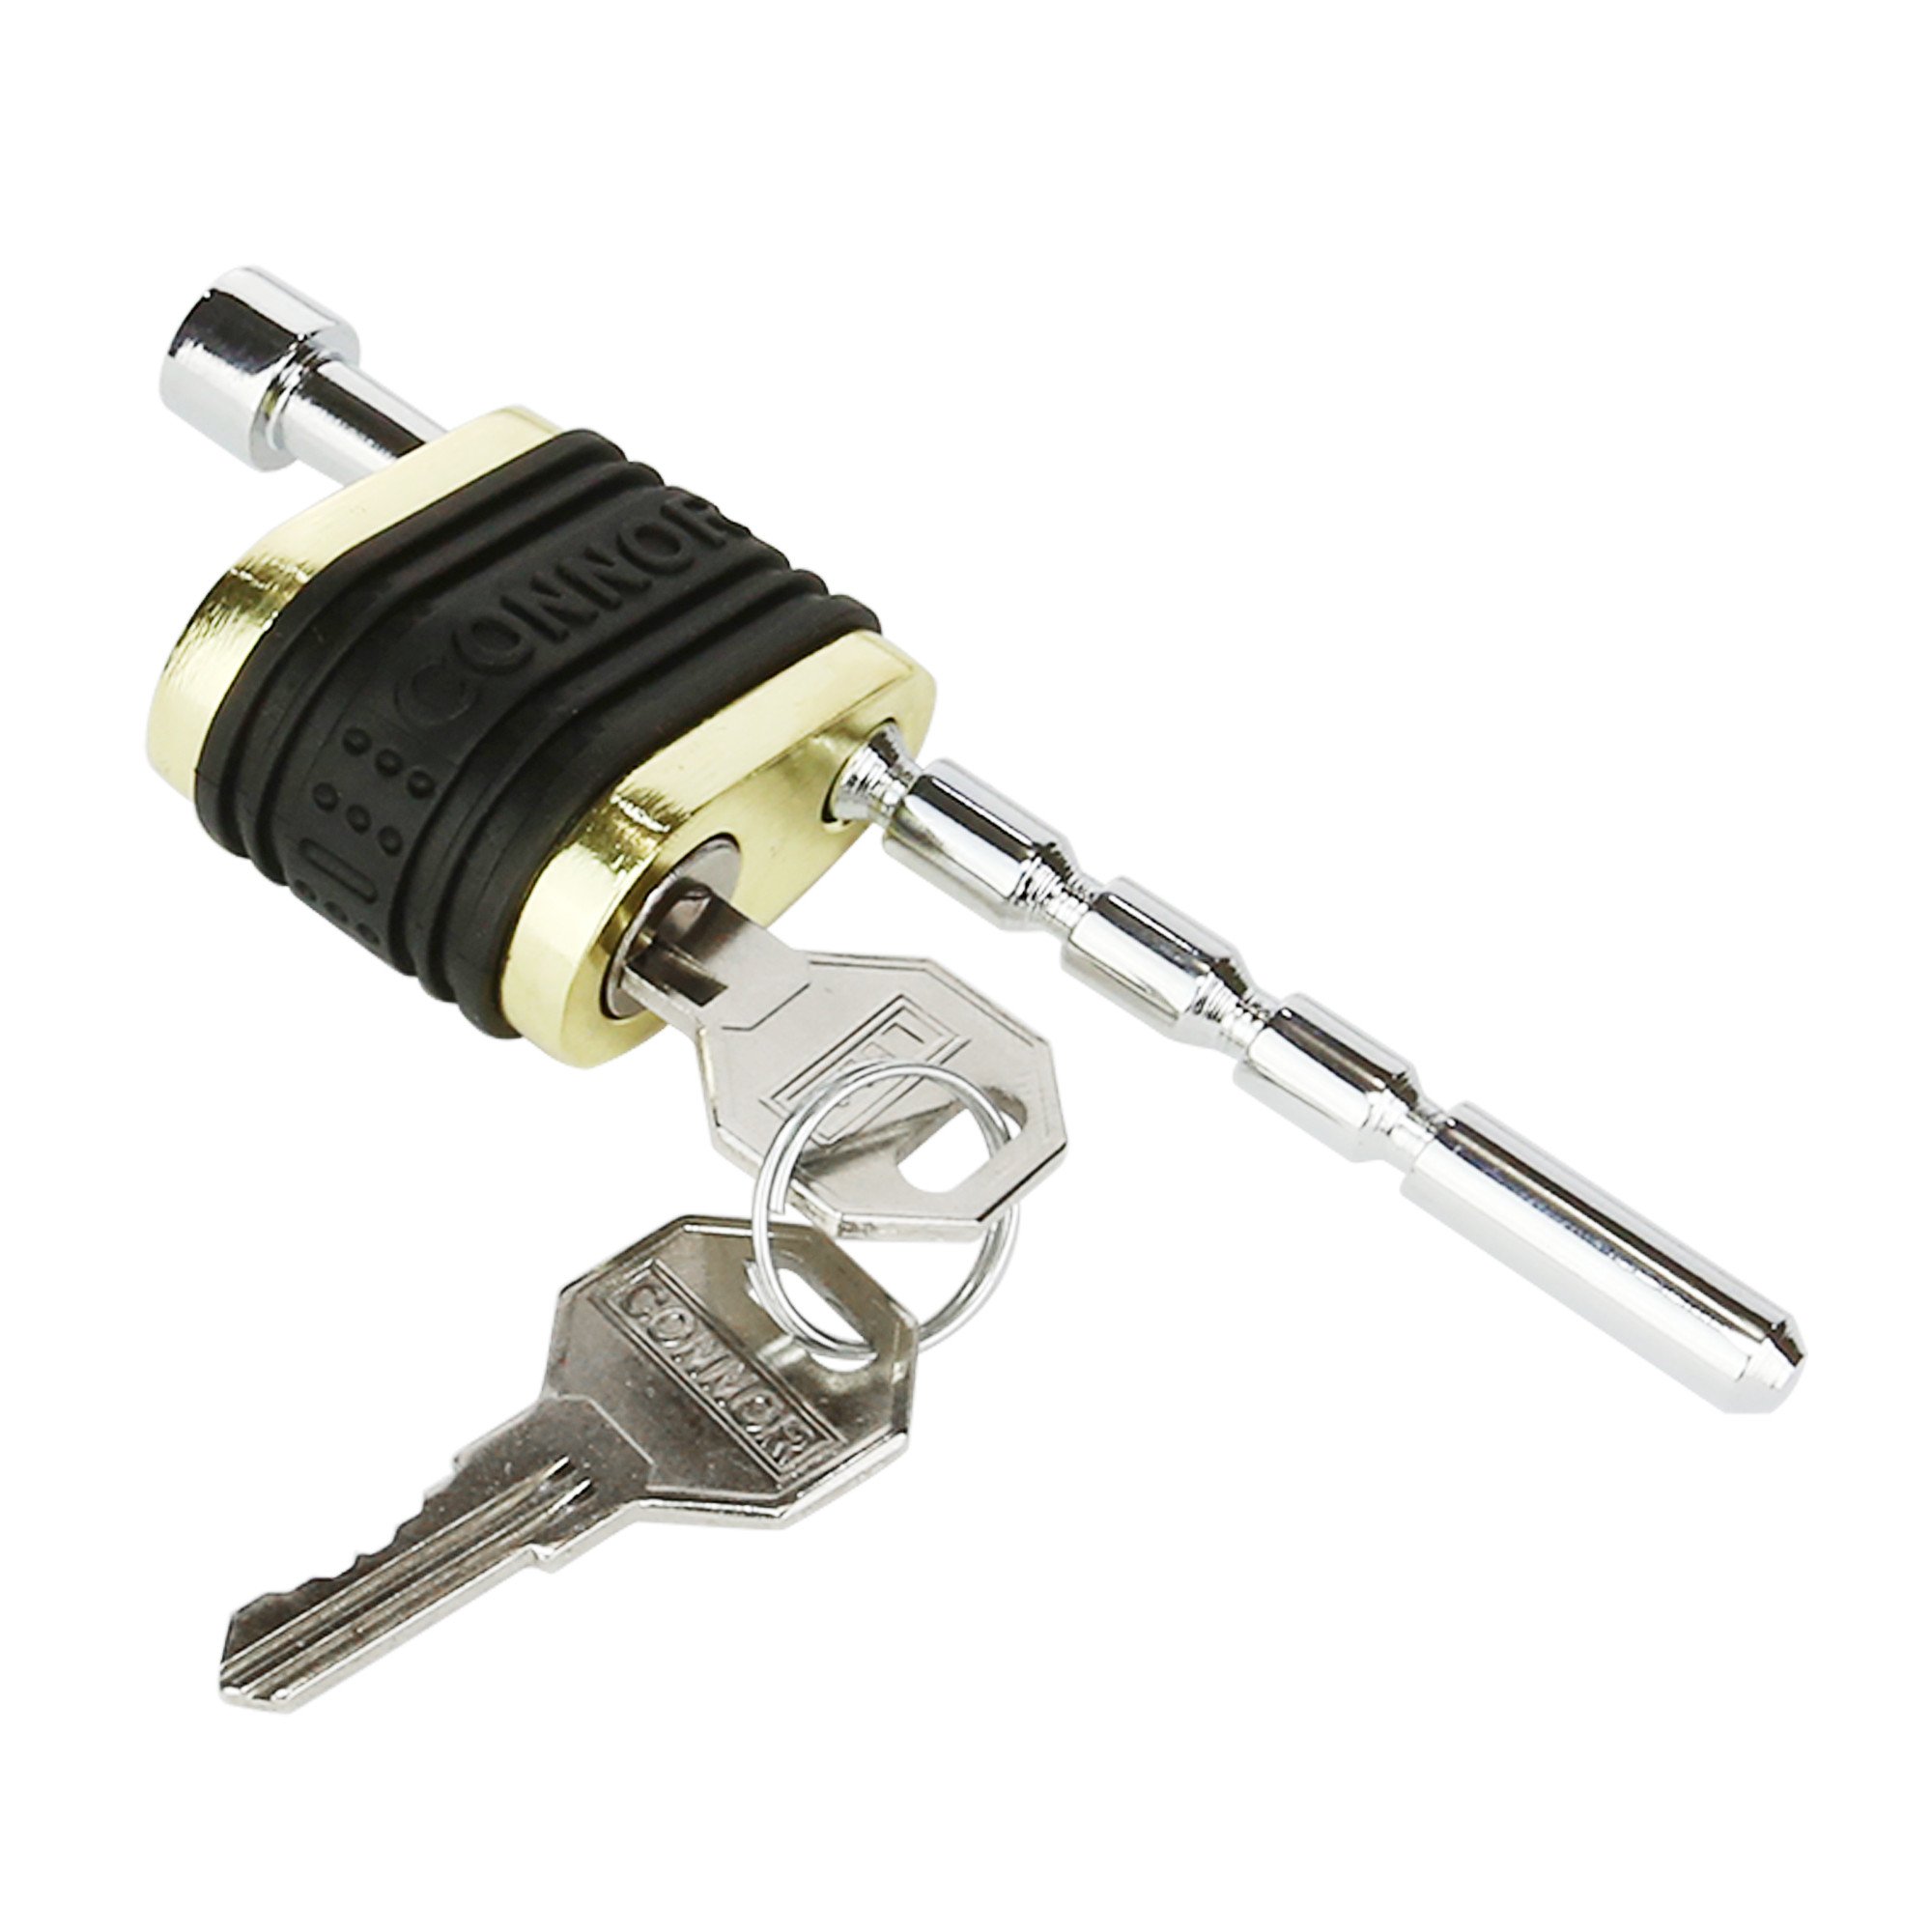 Keys for Connor Hitch Receiver Locks 1615100, 1615130 Trailer ...